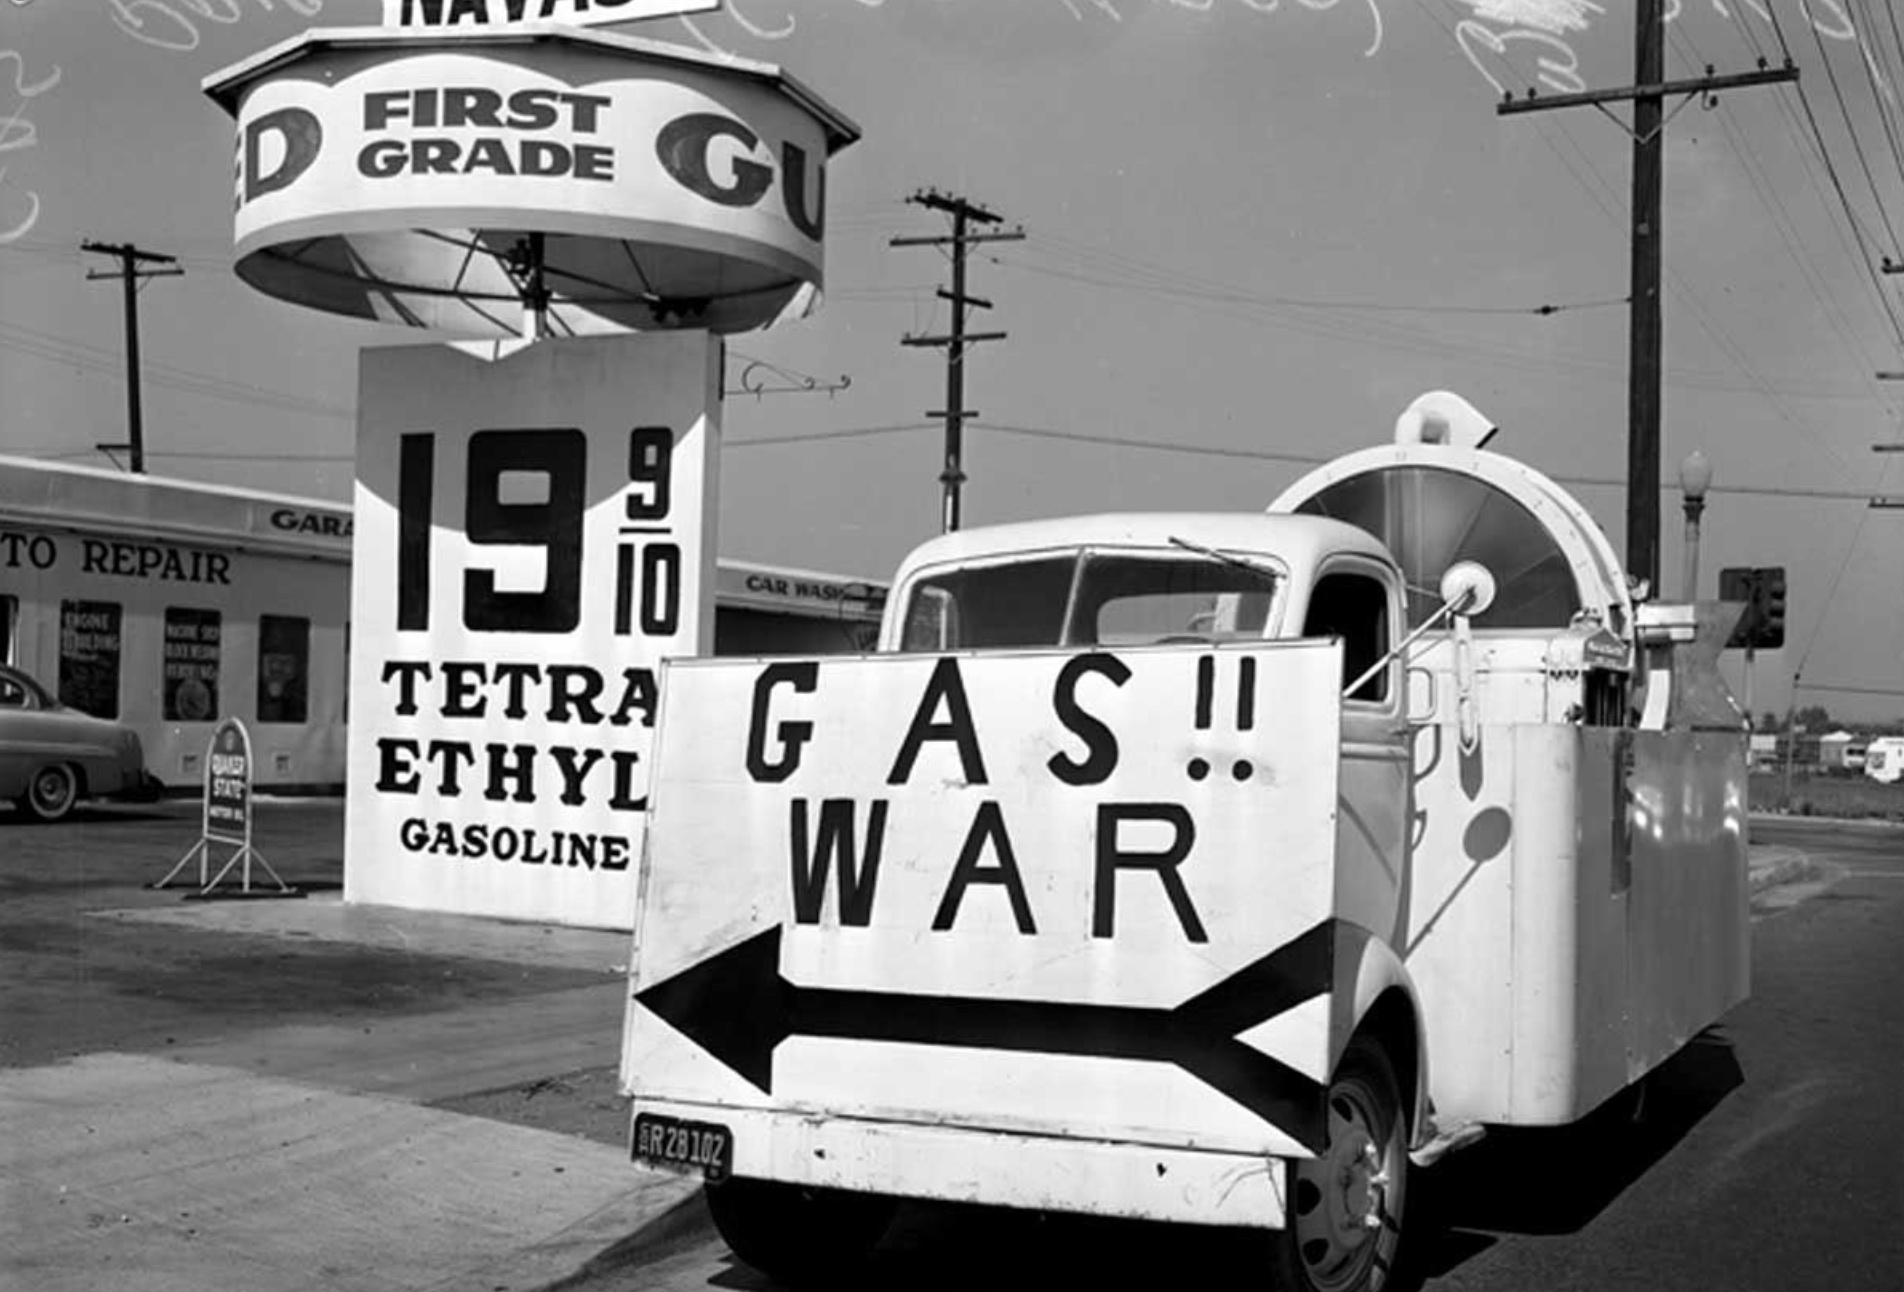 monochrome - To Repair D Gar First Grade Gu 191 Tetra Ethyl Gasoline Gas!! War R28102